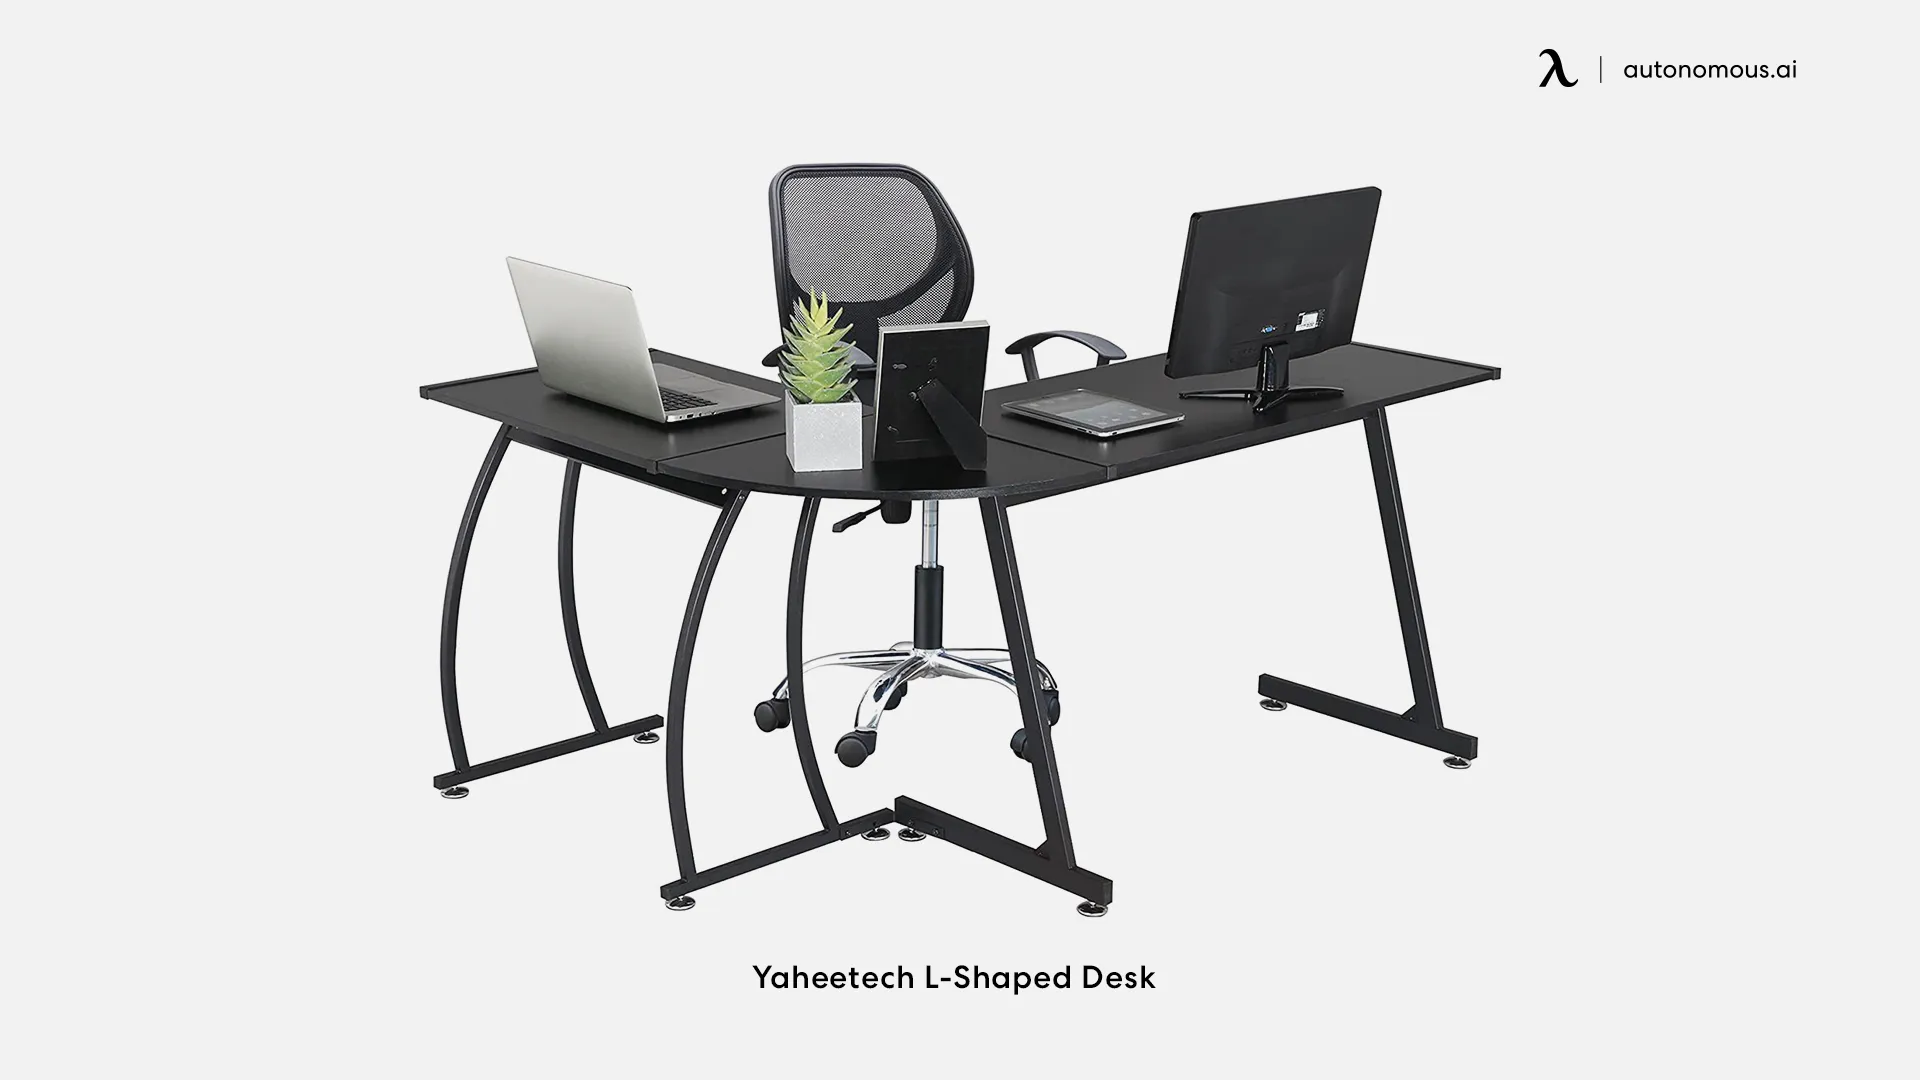 Yaheetech L-Shaped Desk